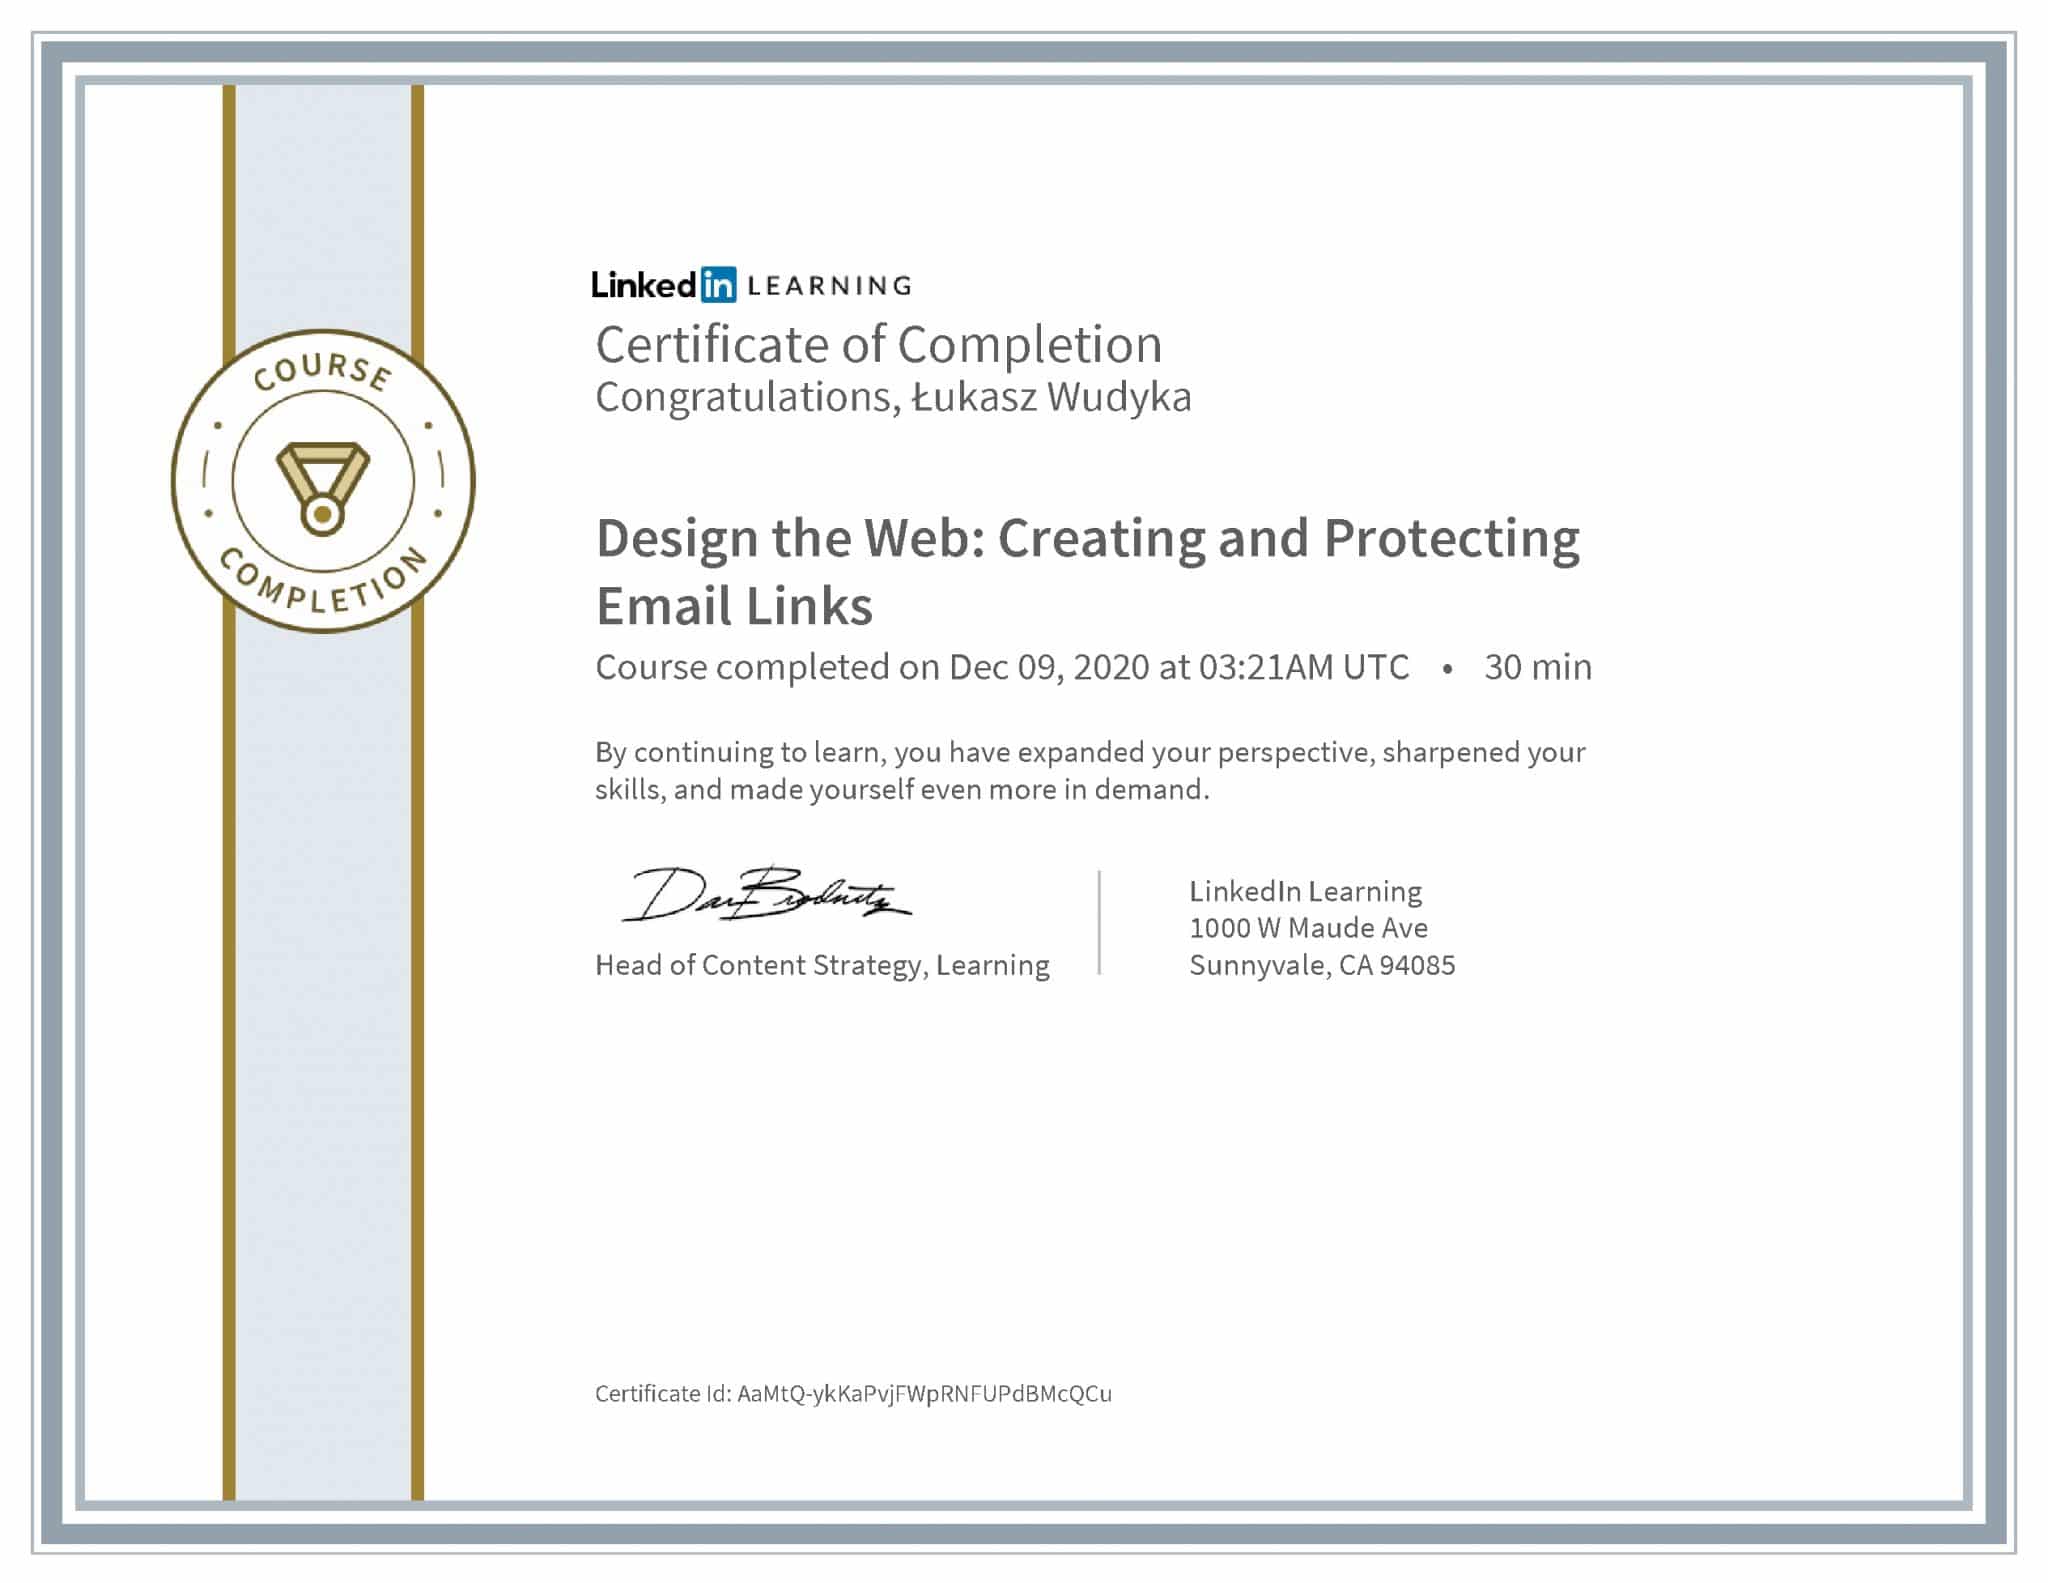 Łukasz Wudyka certyfikat LinkedIn Design the Web: Creating and Protecting Email Links